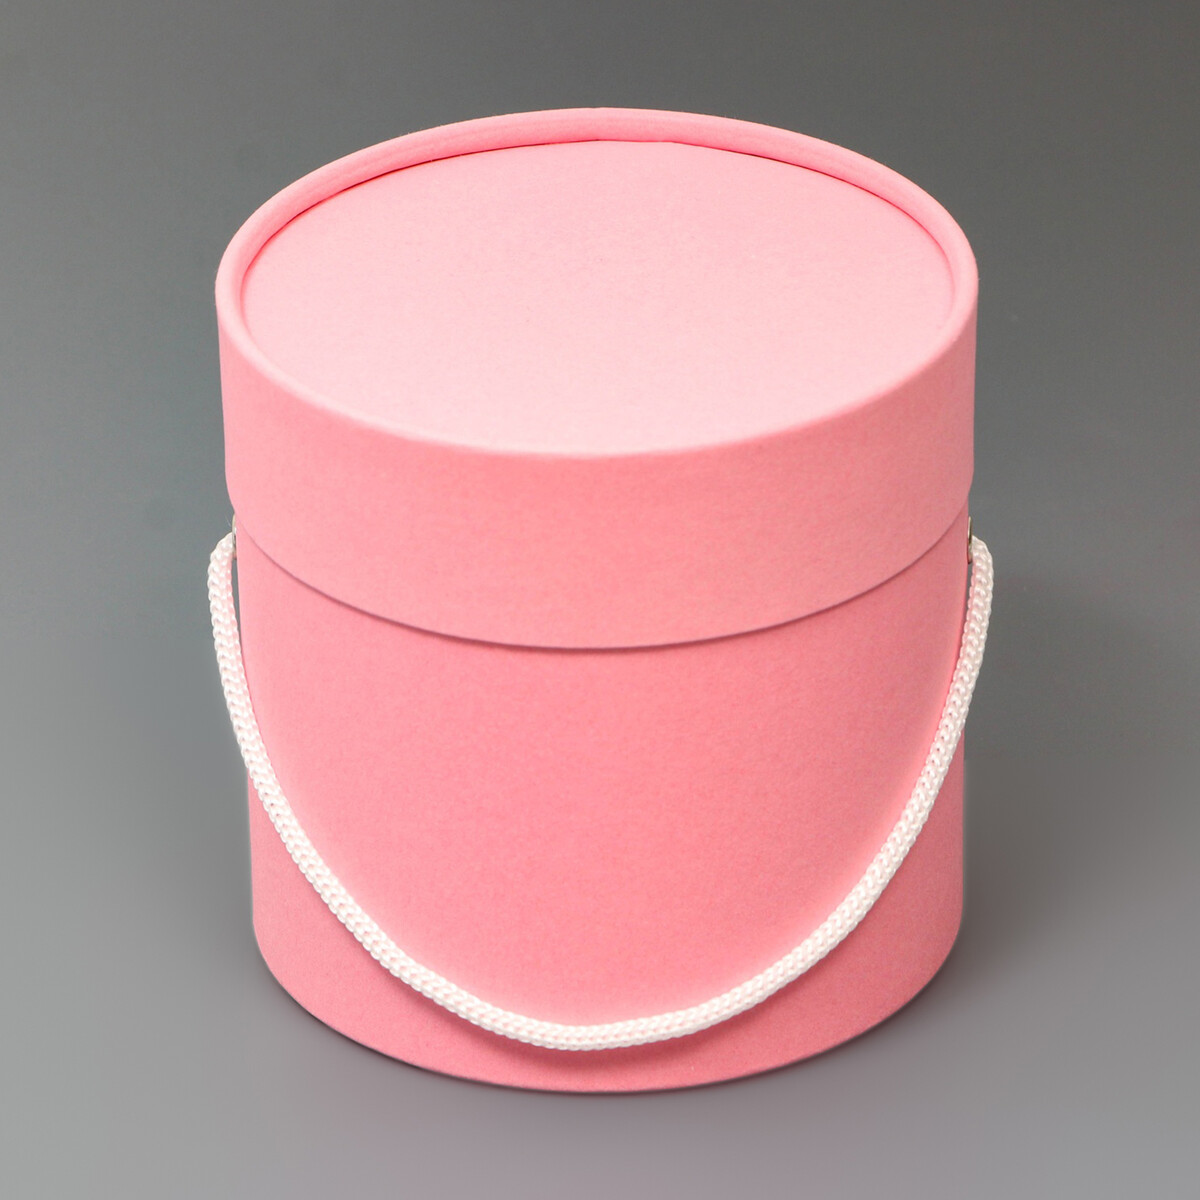 Подарочная коробка, круглая, розовая,с шнурком, 12 х 12 см салфетка сервировочная полимер 38 см круглая розовая y4 6416